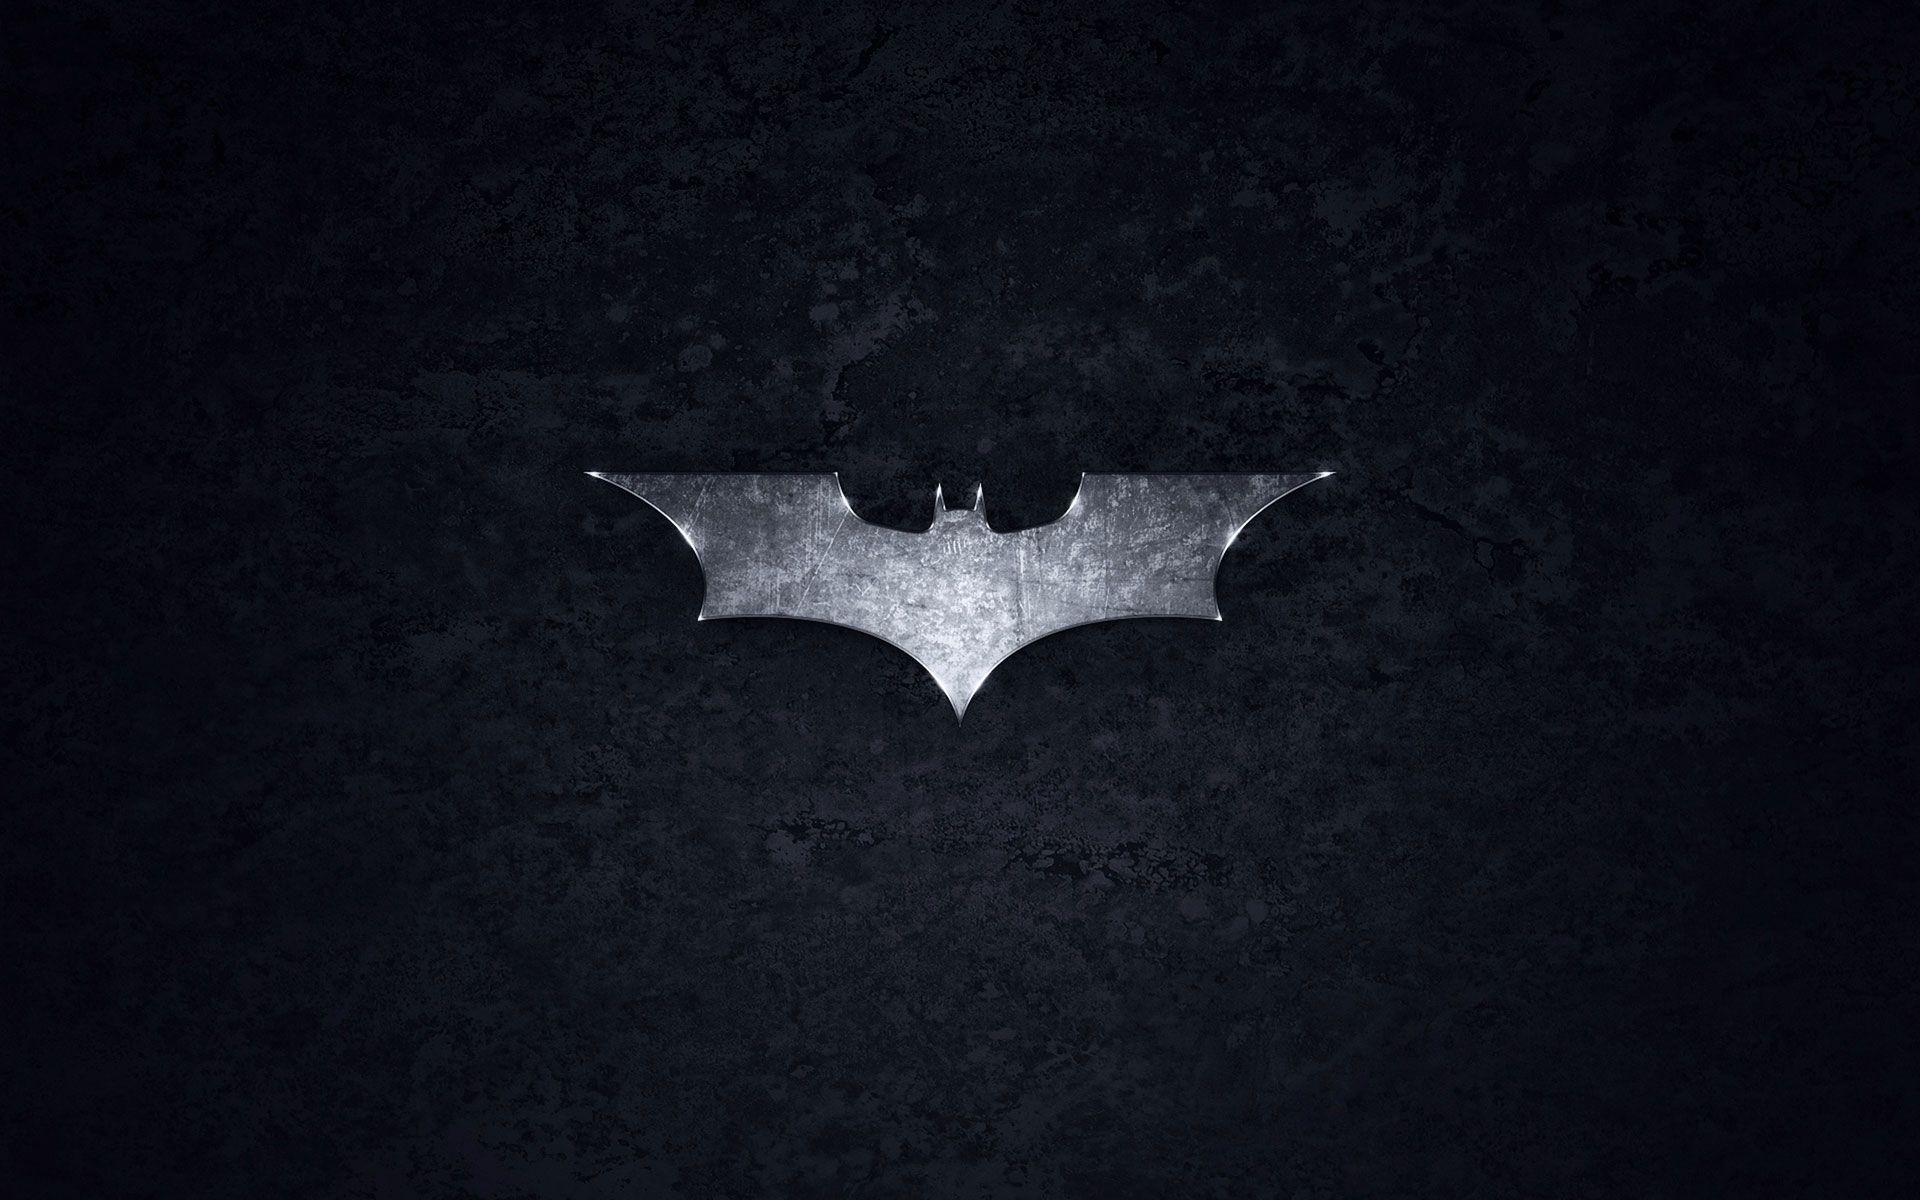  Batman Hintergrundbild 1920x1200. Download Batman wallpaper for mobile phone, free Batman HD picture